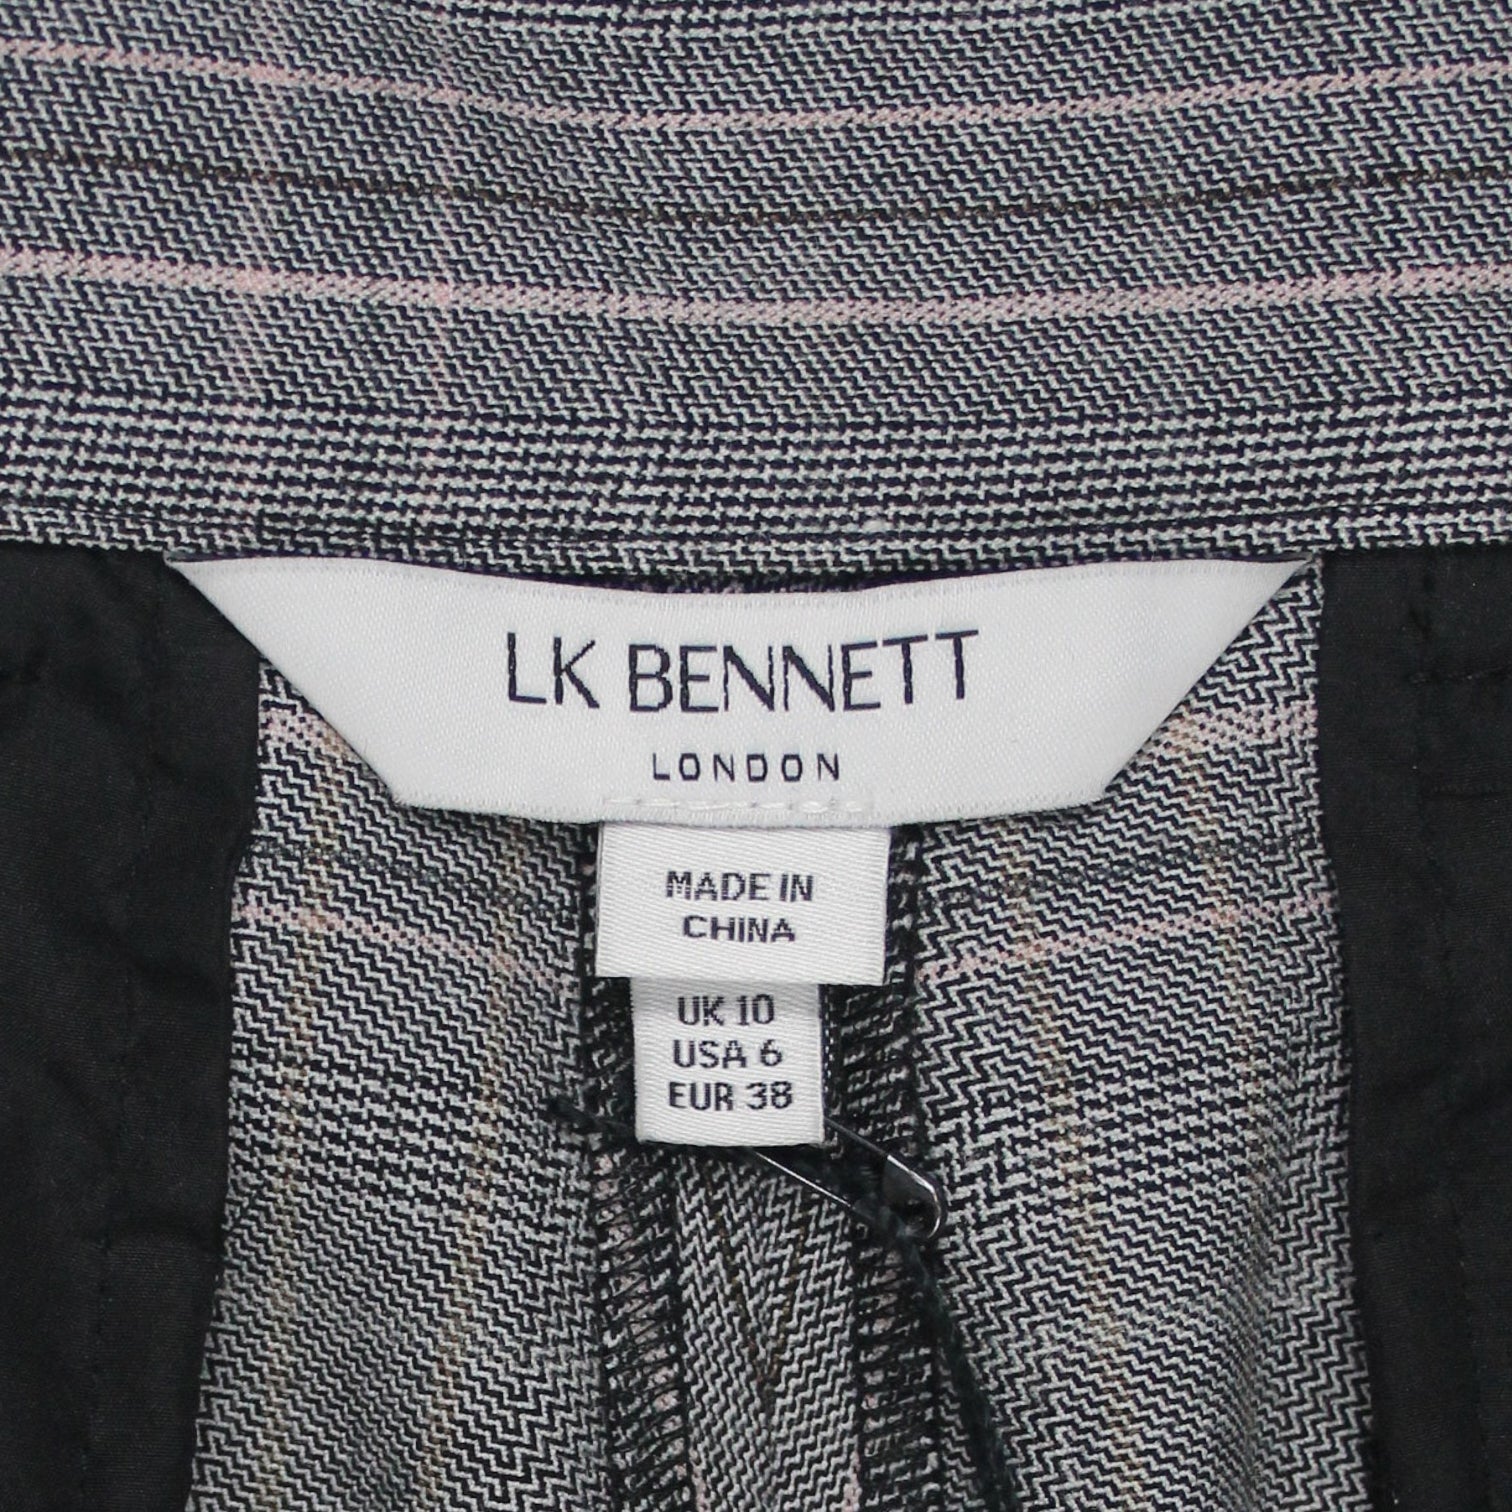 L.K. Bennett Grey Plaid Cropped Trousers